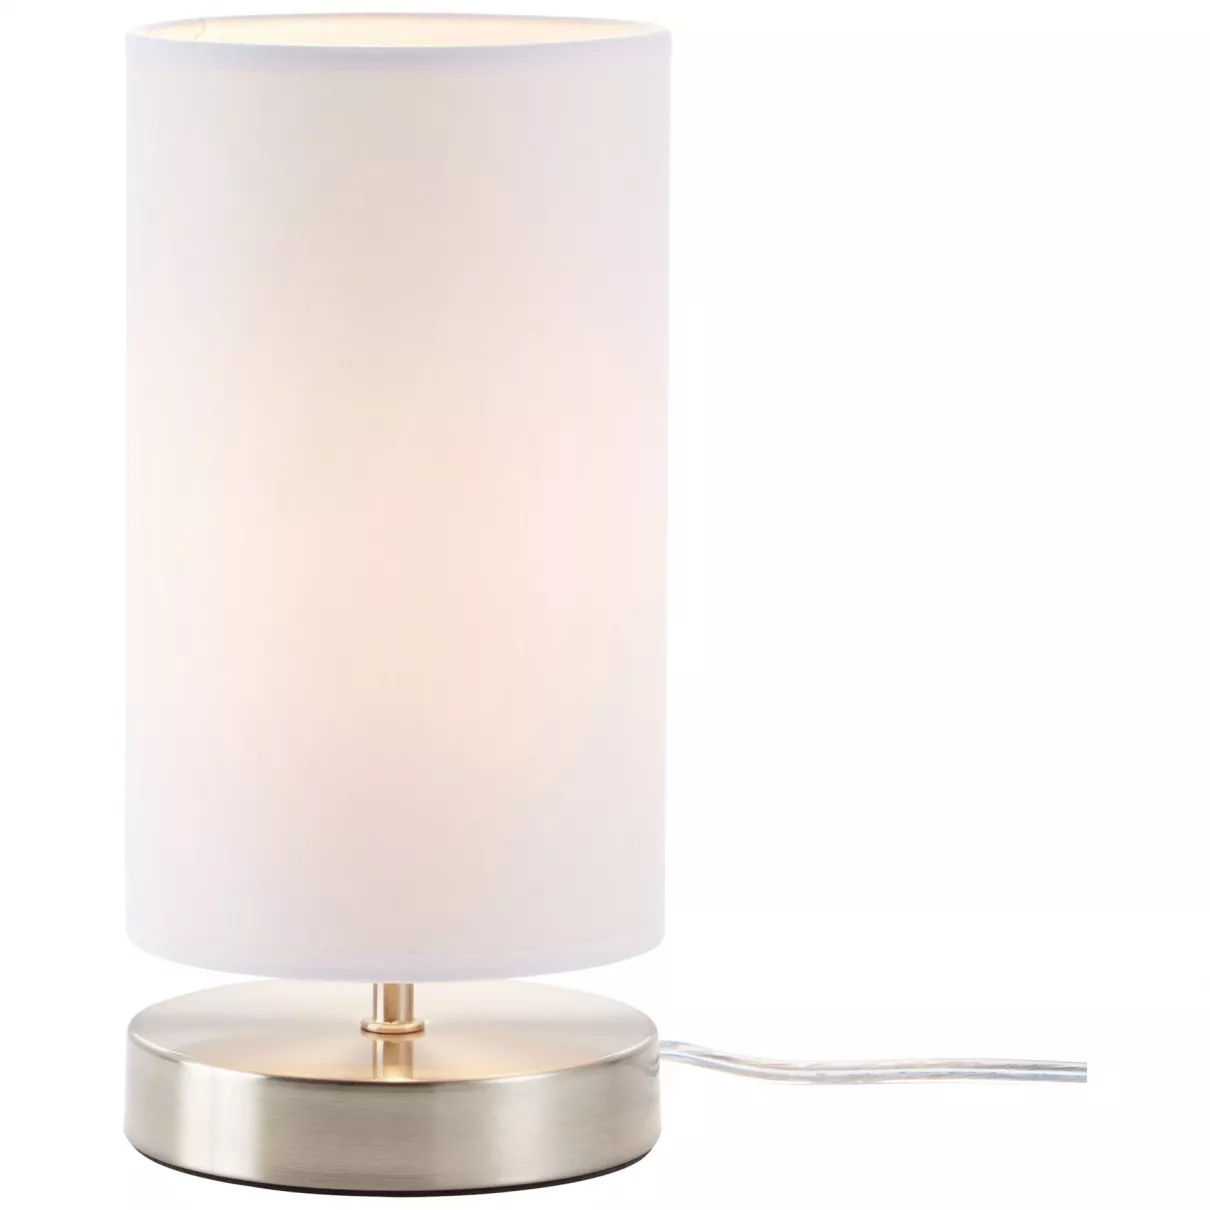 Clarie - Fehér asztali lámpa, E14 1x40W - Brilliant-13247/05